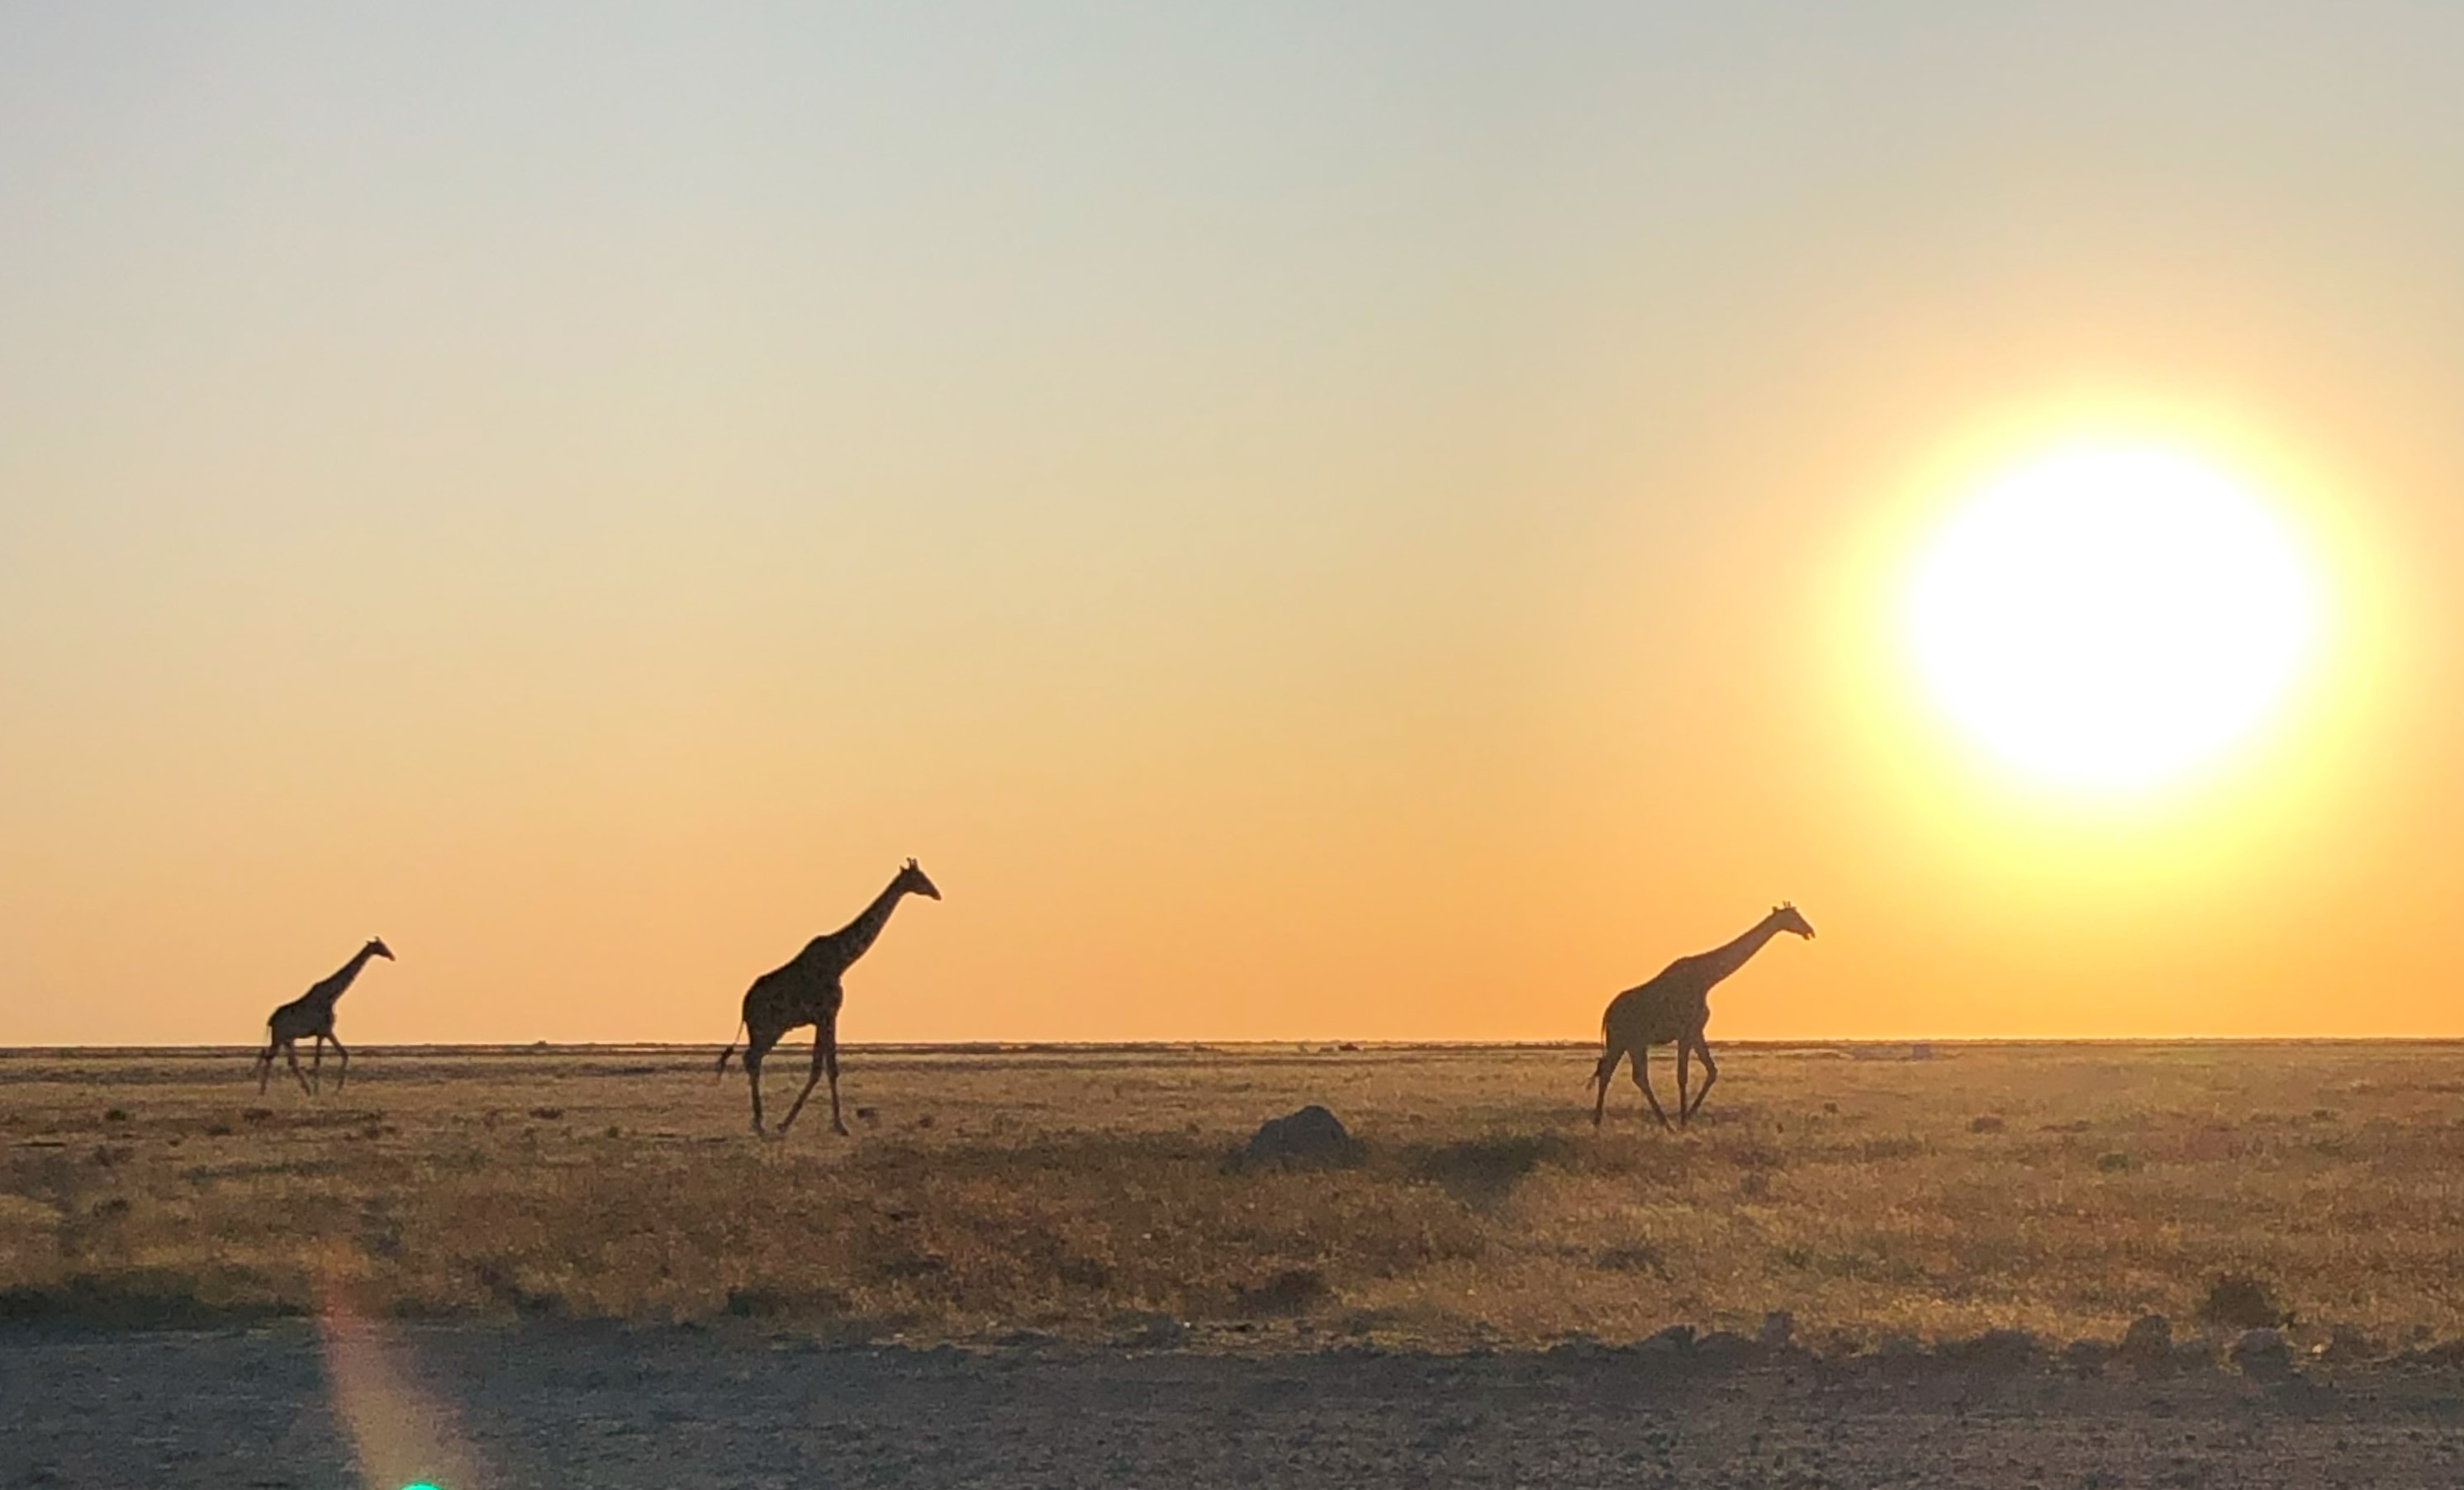 Three giraffes walking on the plains during sunset